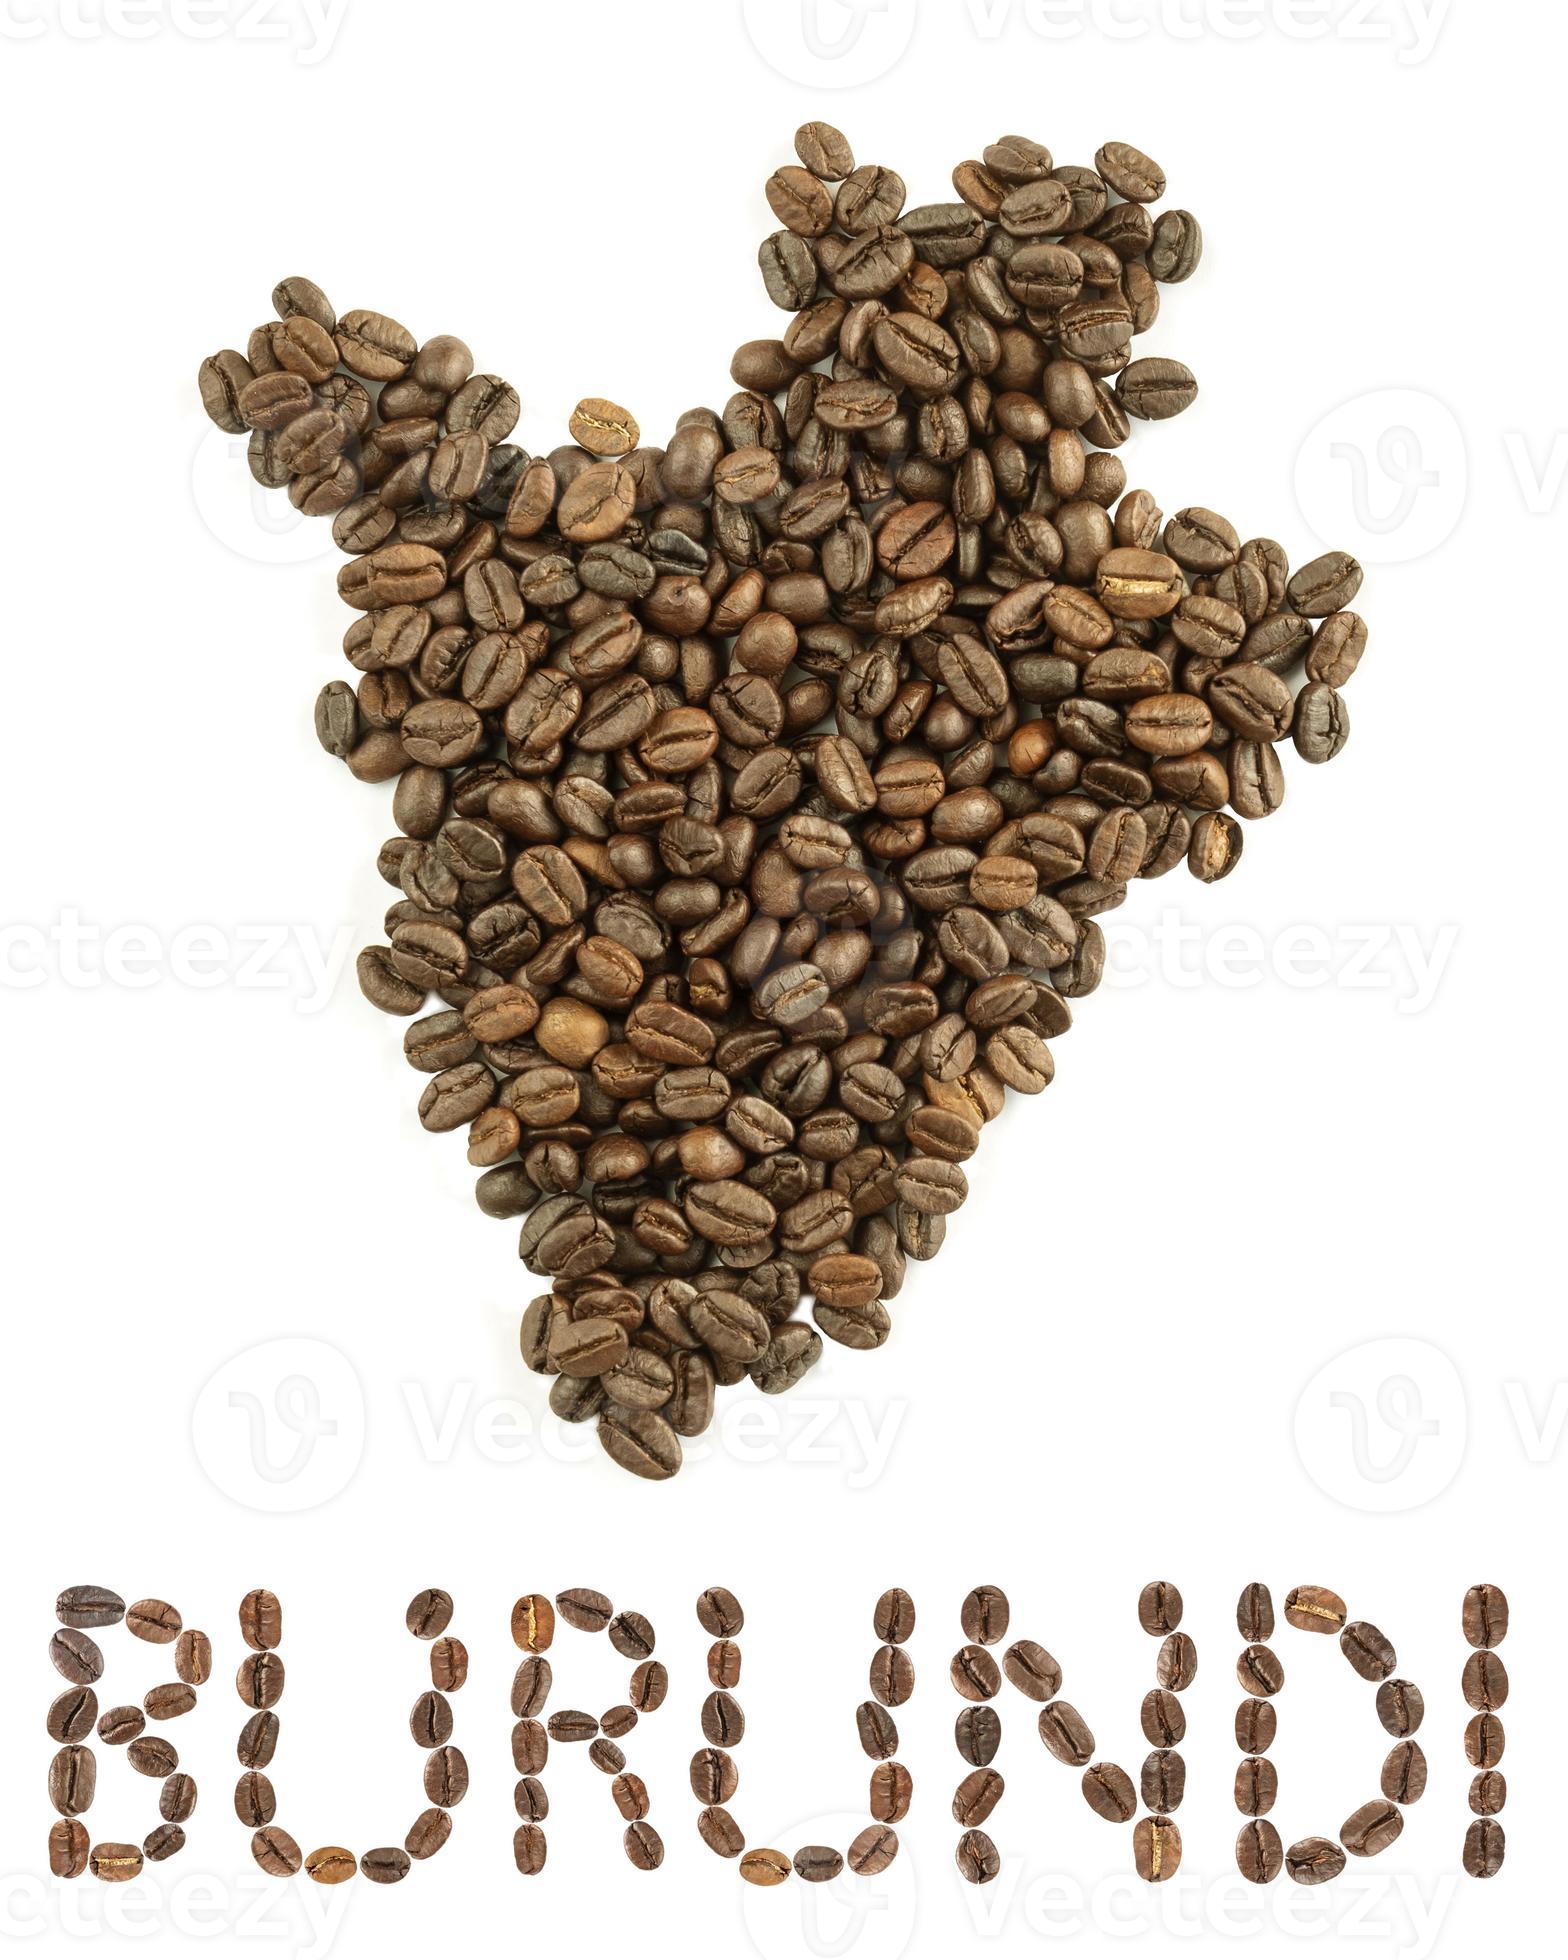 mapa de burundi feito de grãos de café torrados isolados no fundo branco foto